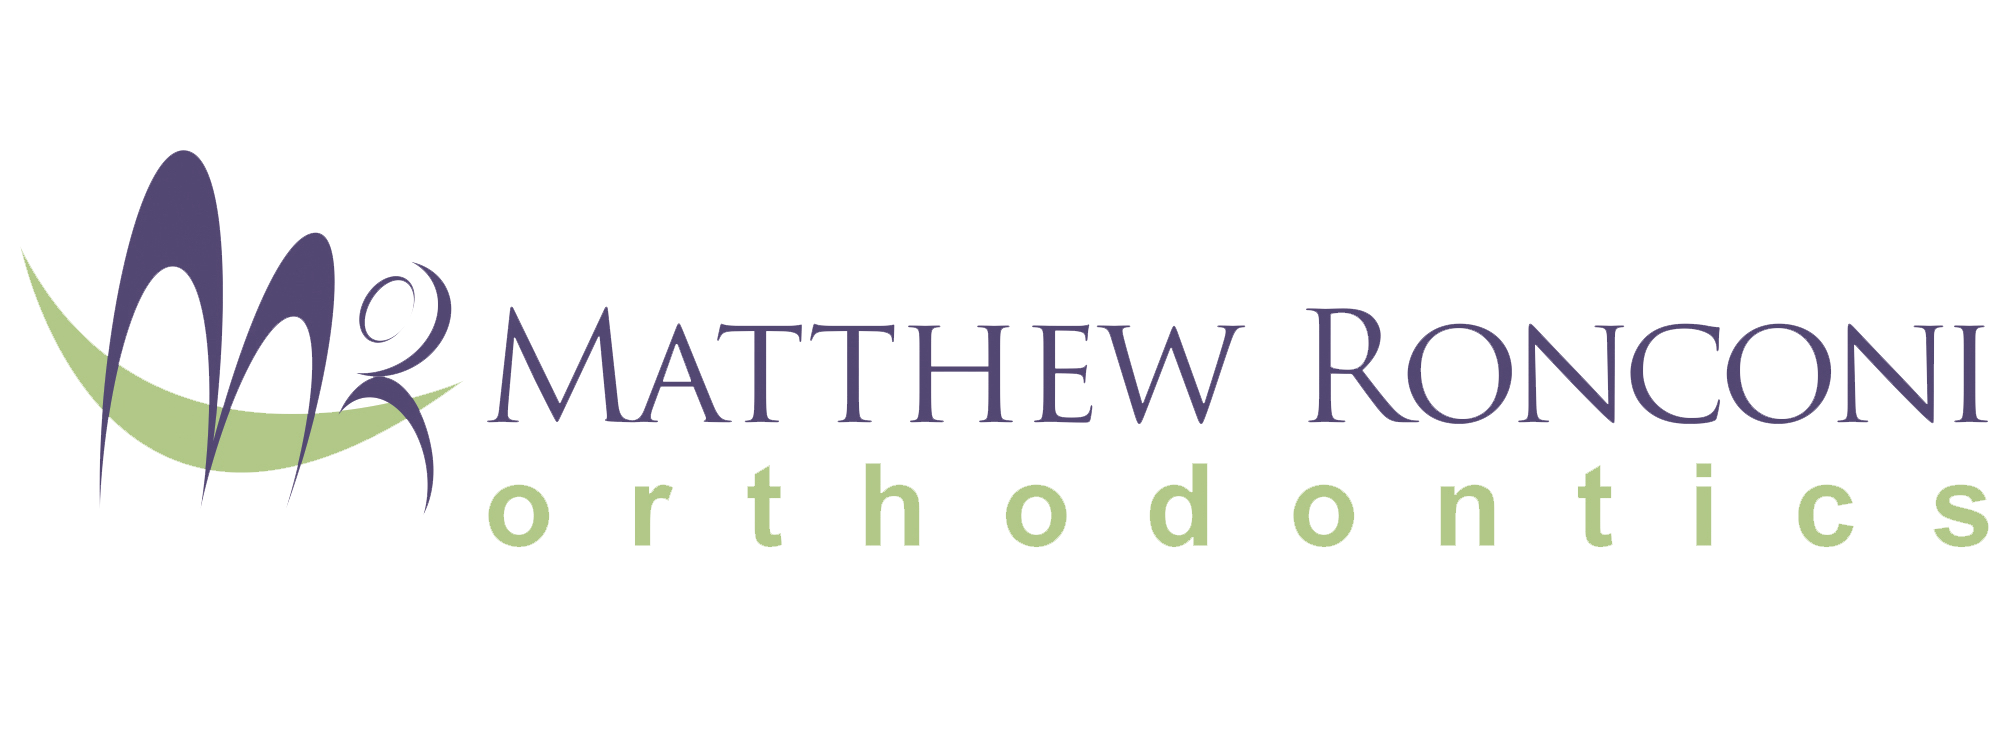 Matthew ronni orthodontics logo.